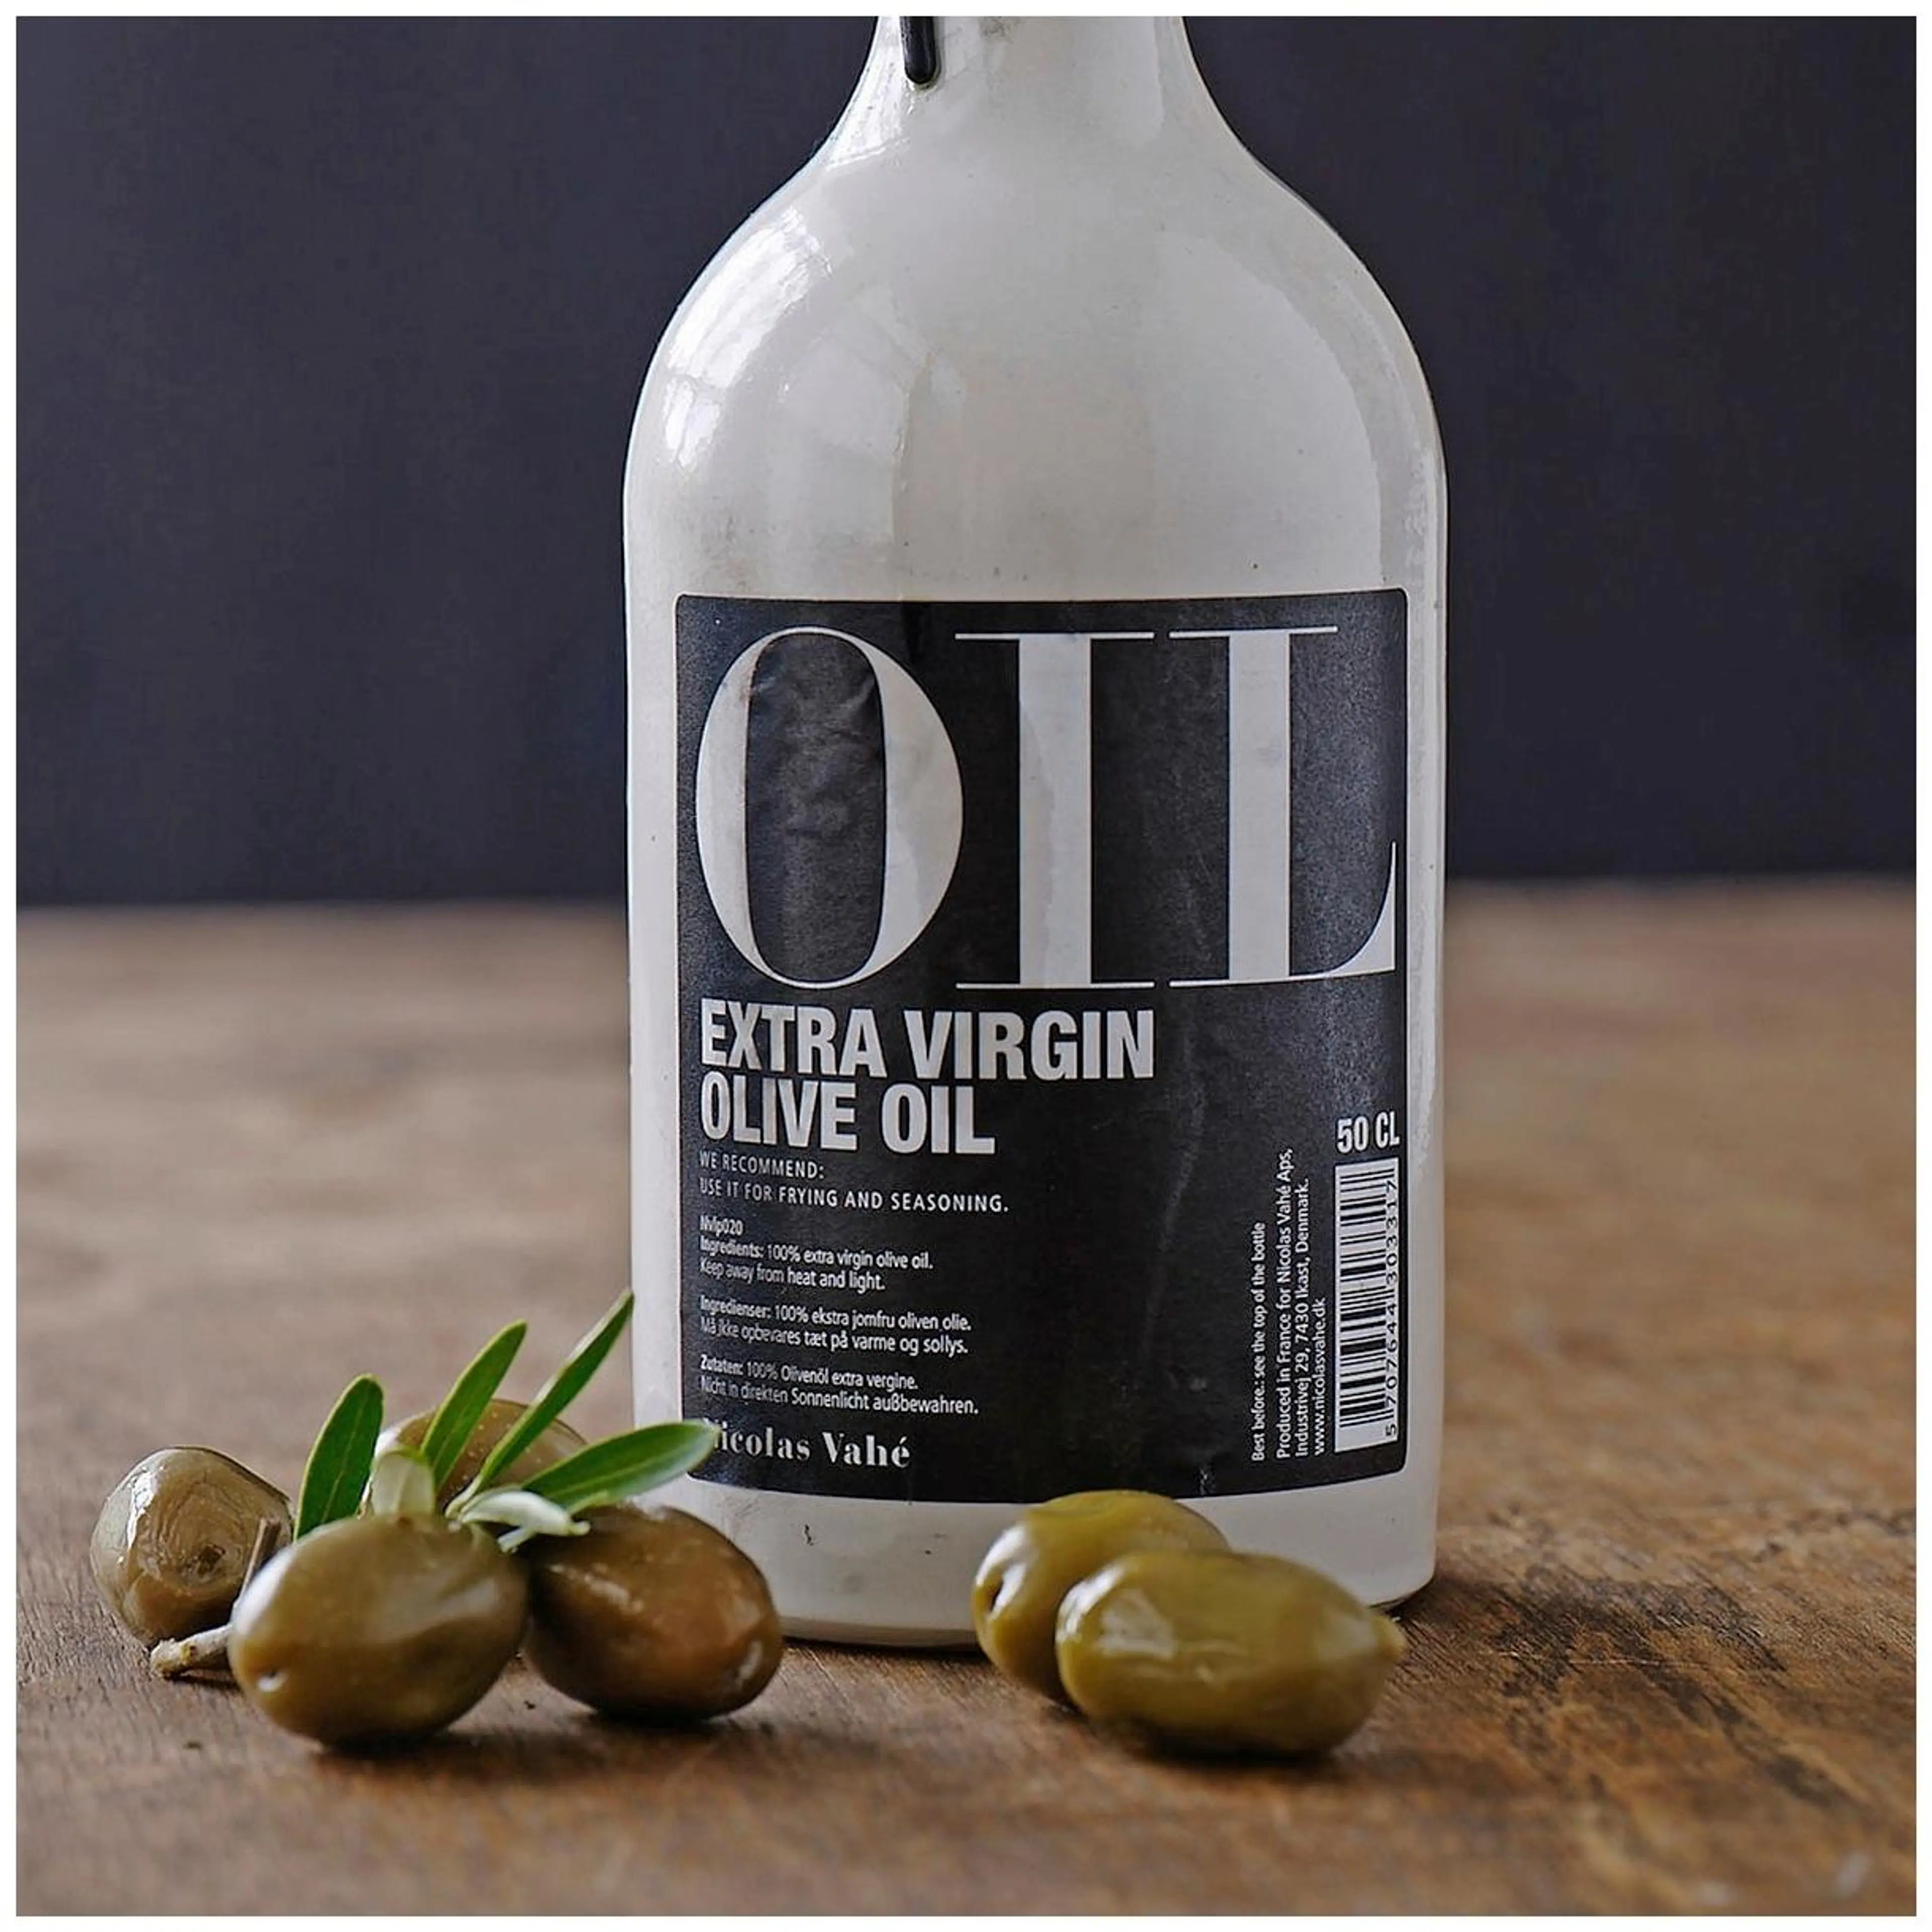 Nicolas Vahé Extra Virgin Olive Oil oliiviöljy 50 cl